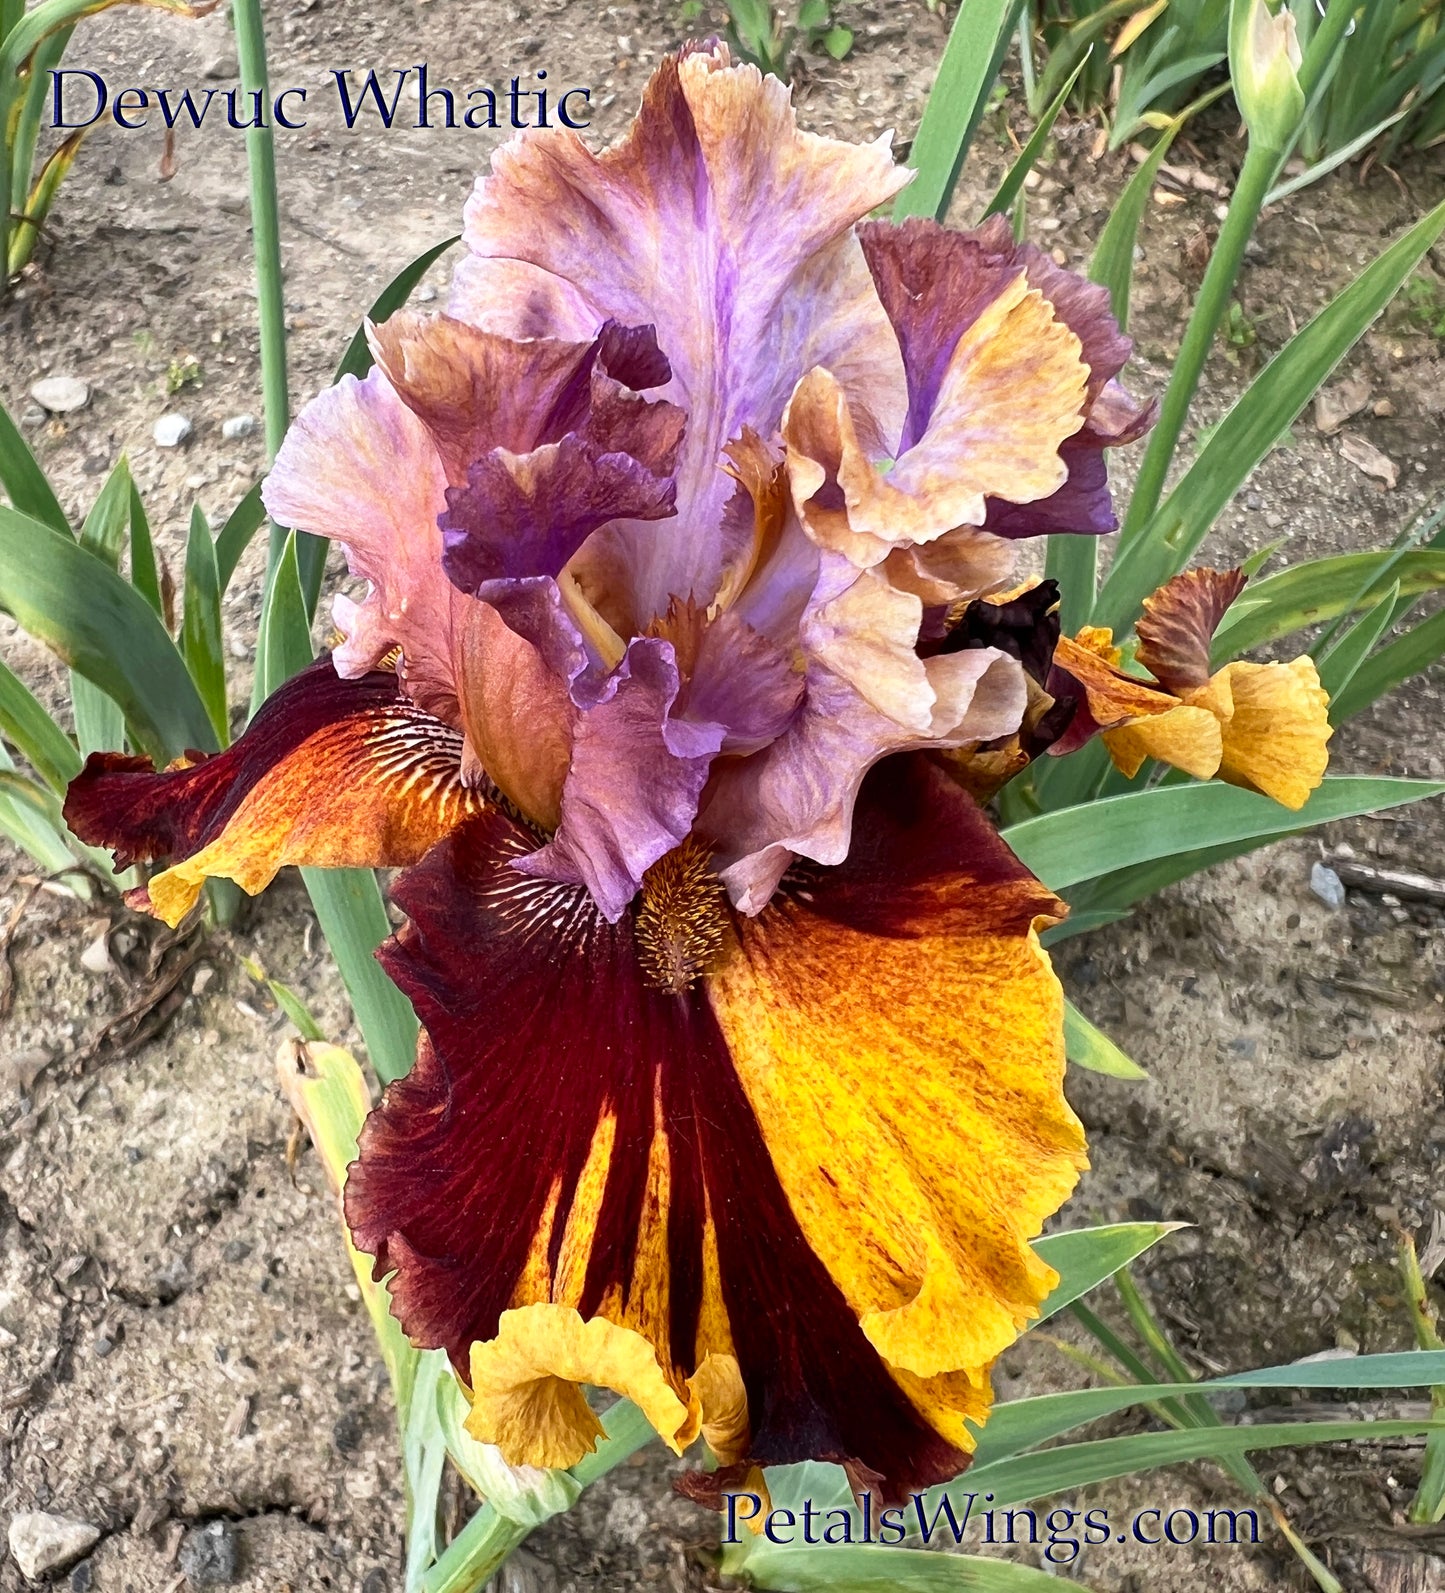 DEWUC WHATIC - Tall Bearded iris